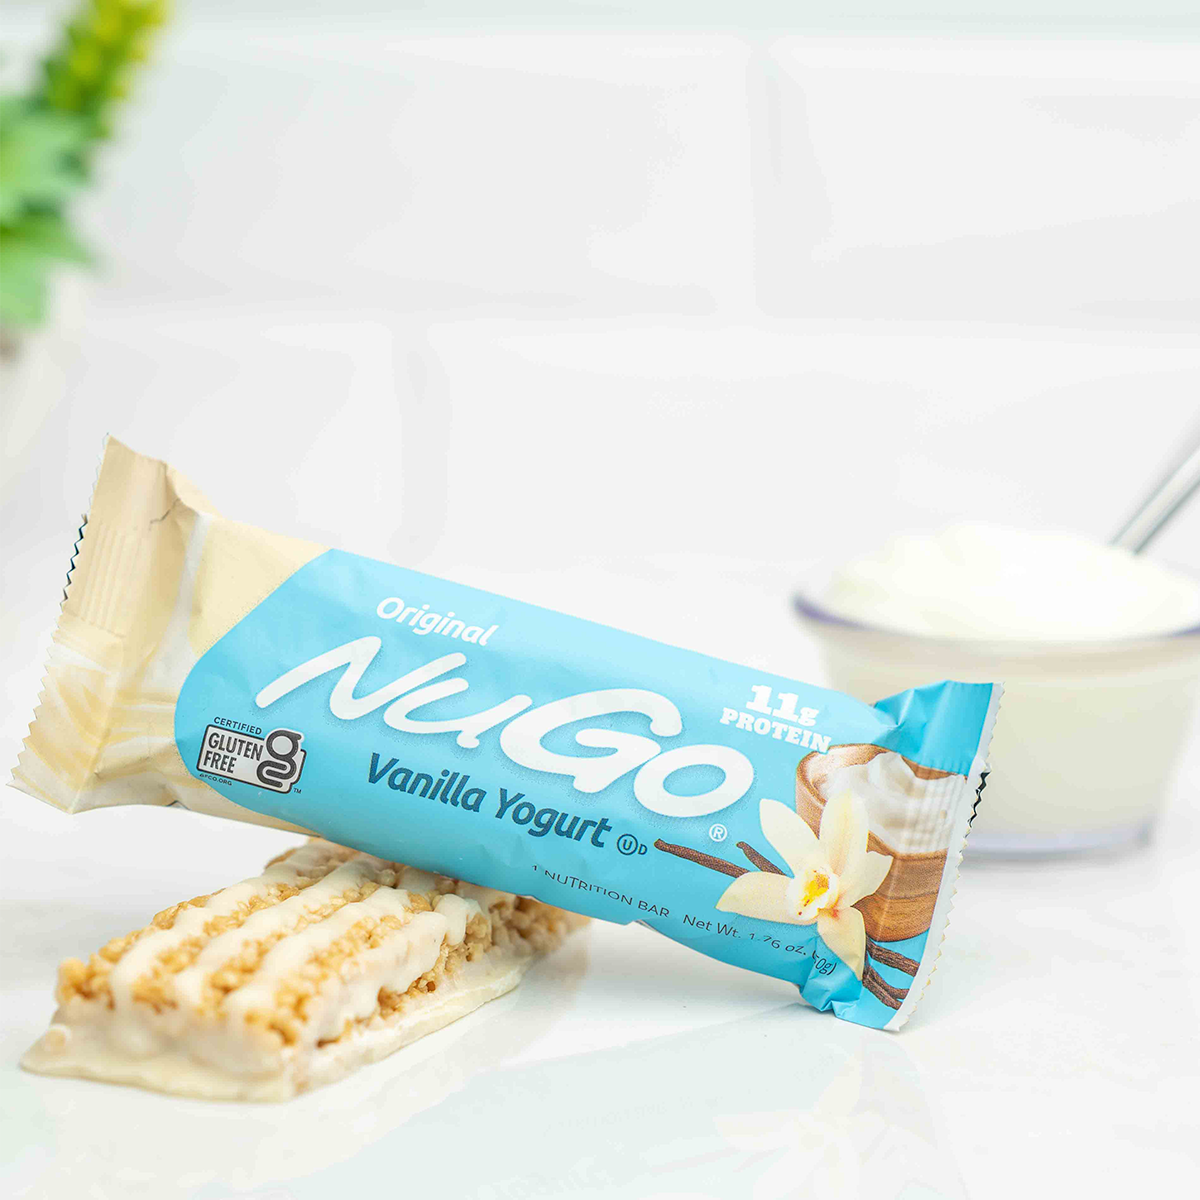 2 NuGo Original Vanilla Yogurt bars one wrapper and one unwrapped